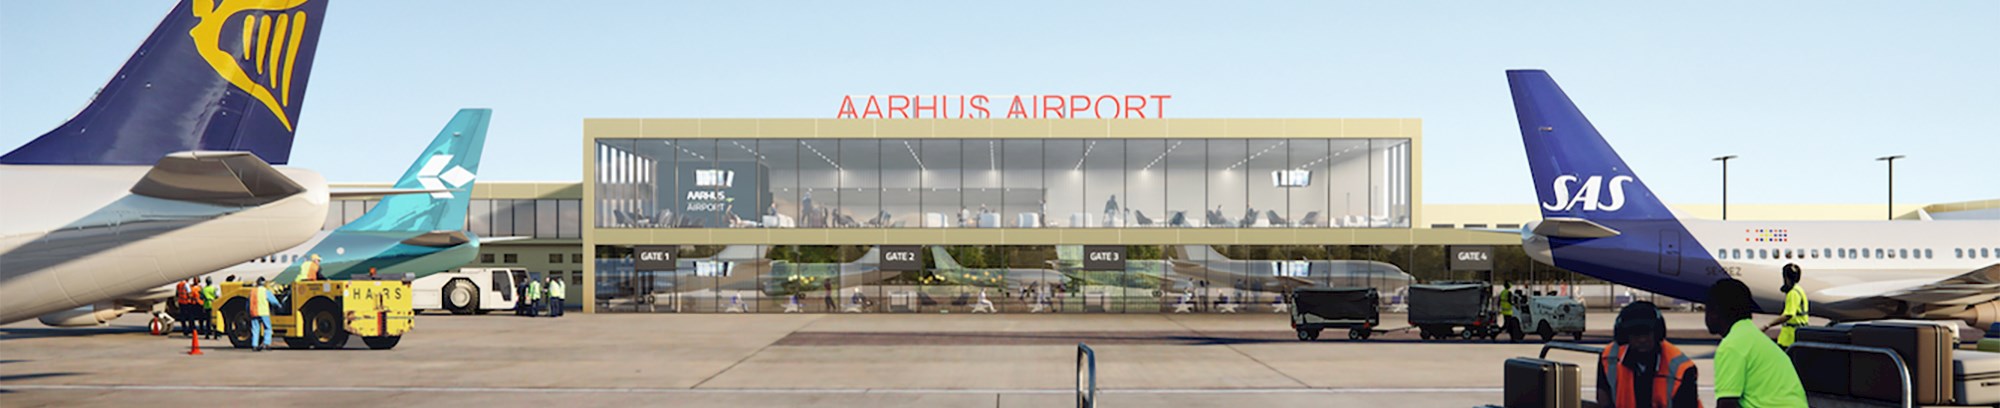 Bliv klogere på Aarhus Airport med FOF Djursland